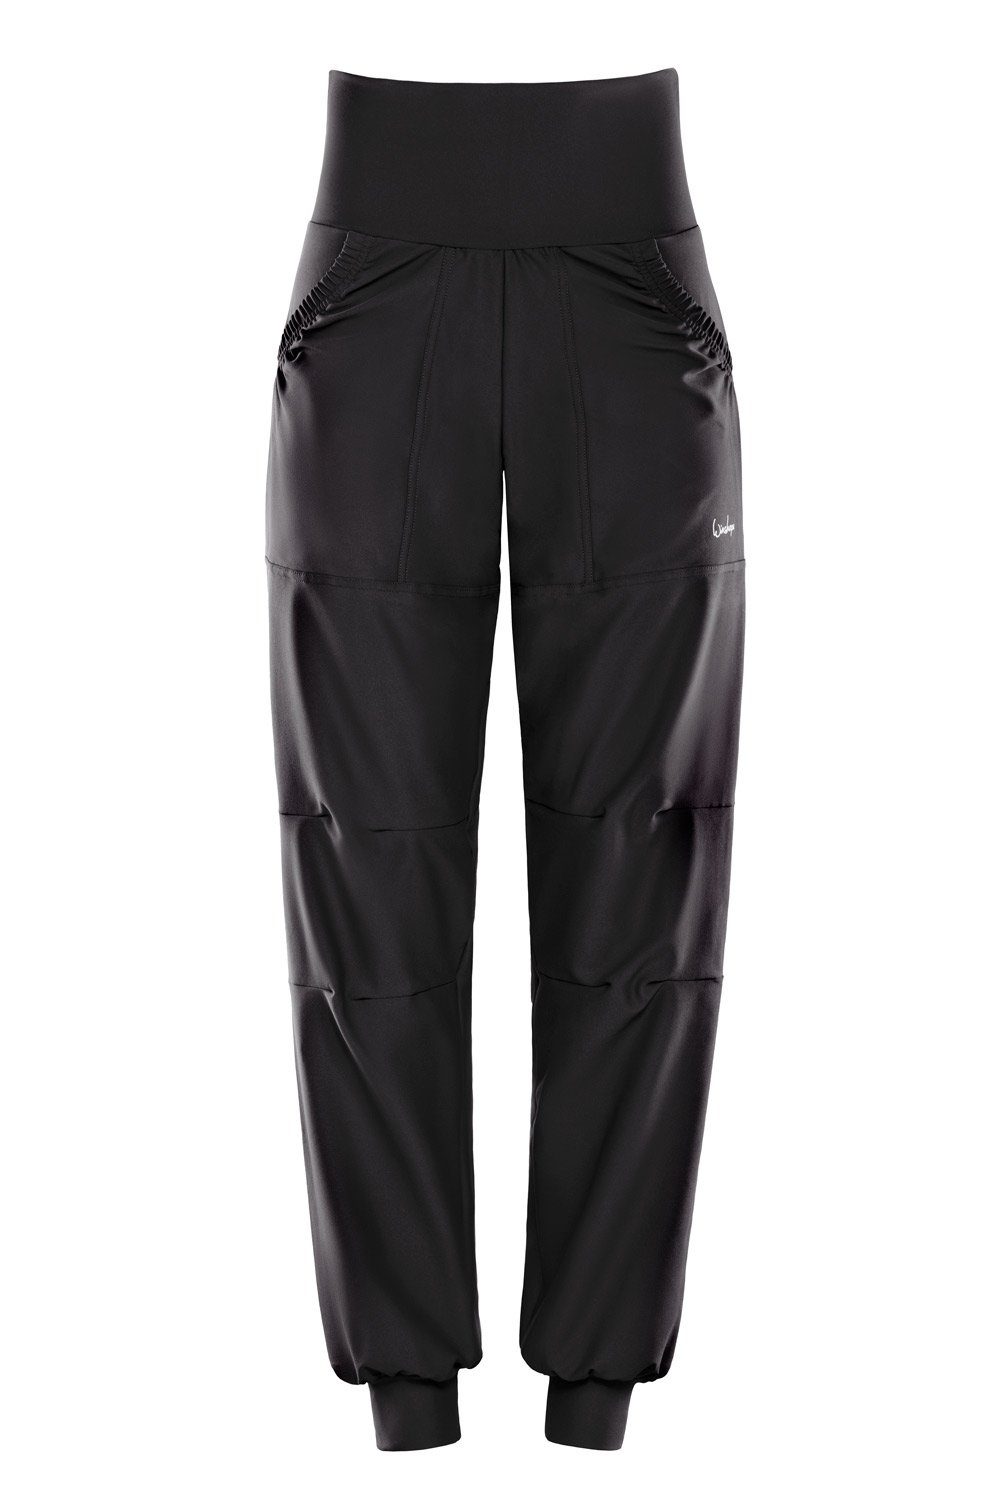 Winshape Sporthose Functional Comfort Leisure Time Trousers LEI101C High Waist schwarz